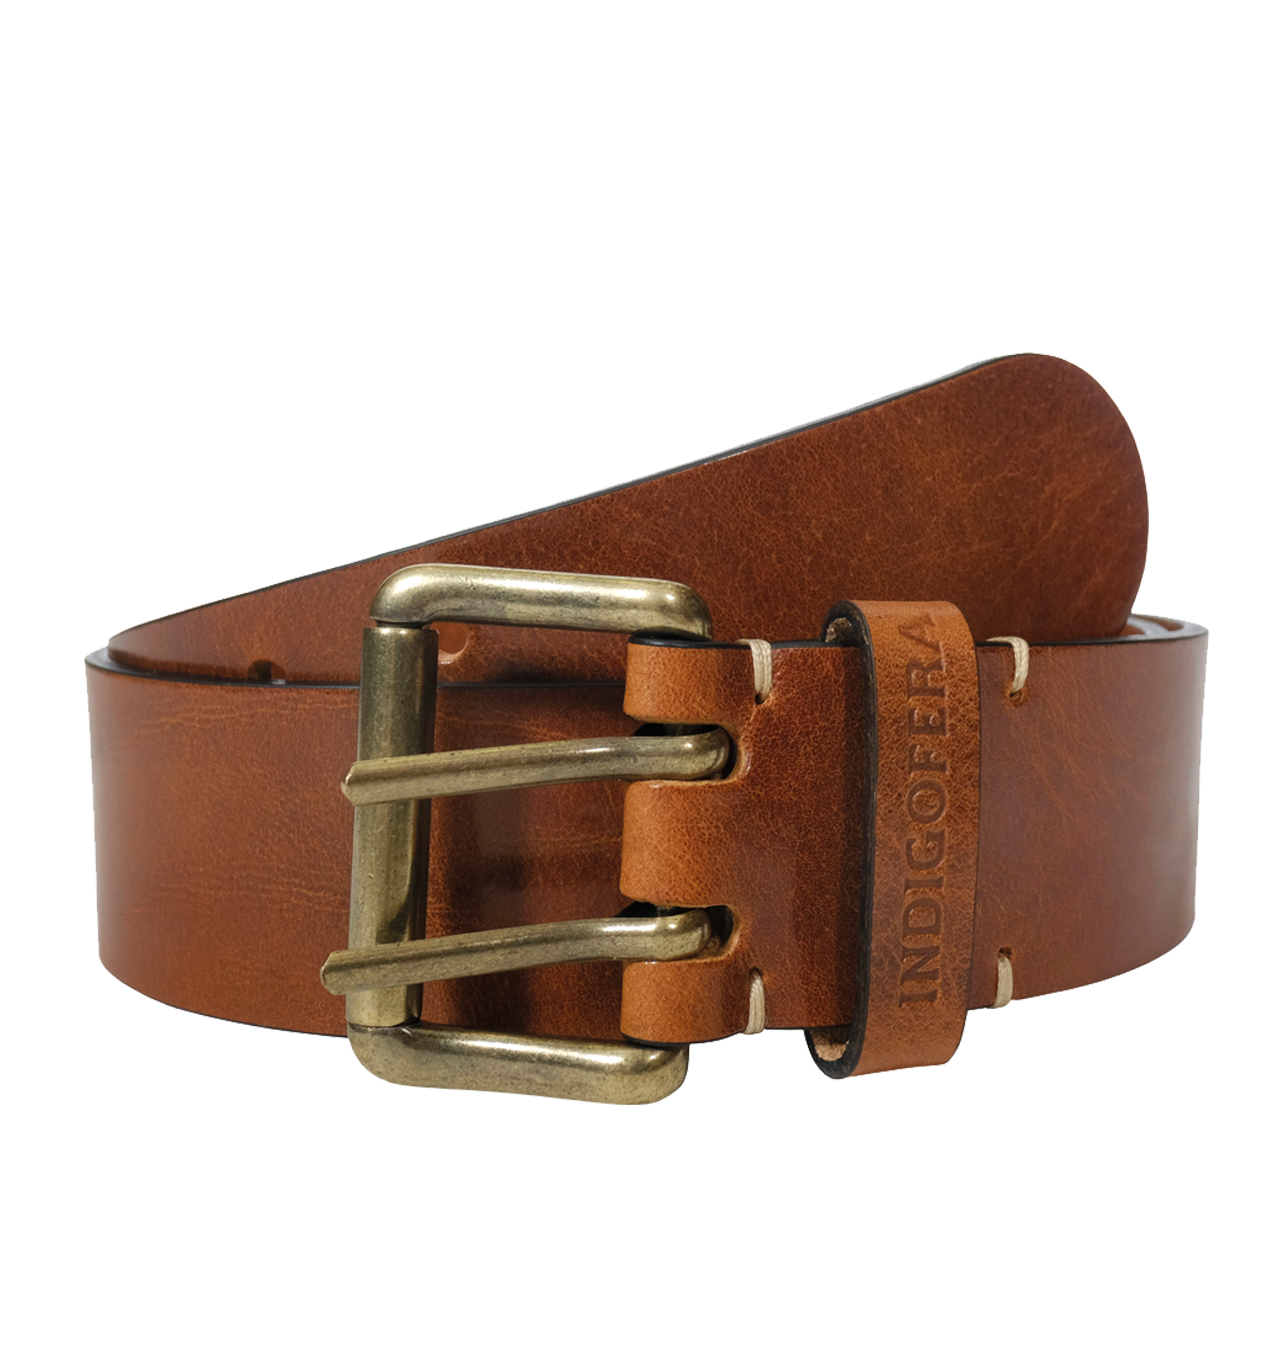 Indigofera---Danko-Leather-Belt-2-prong---Brown-1